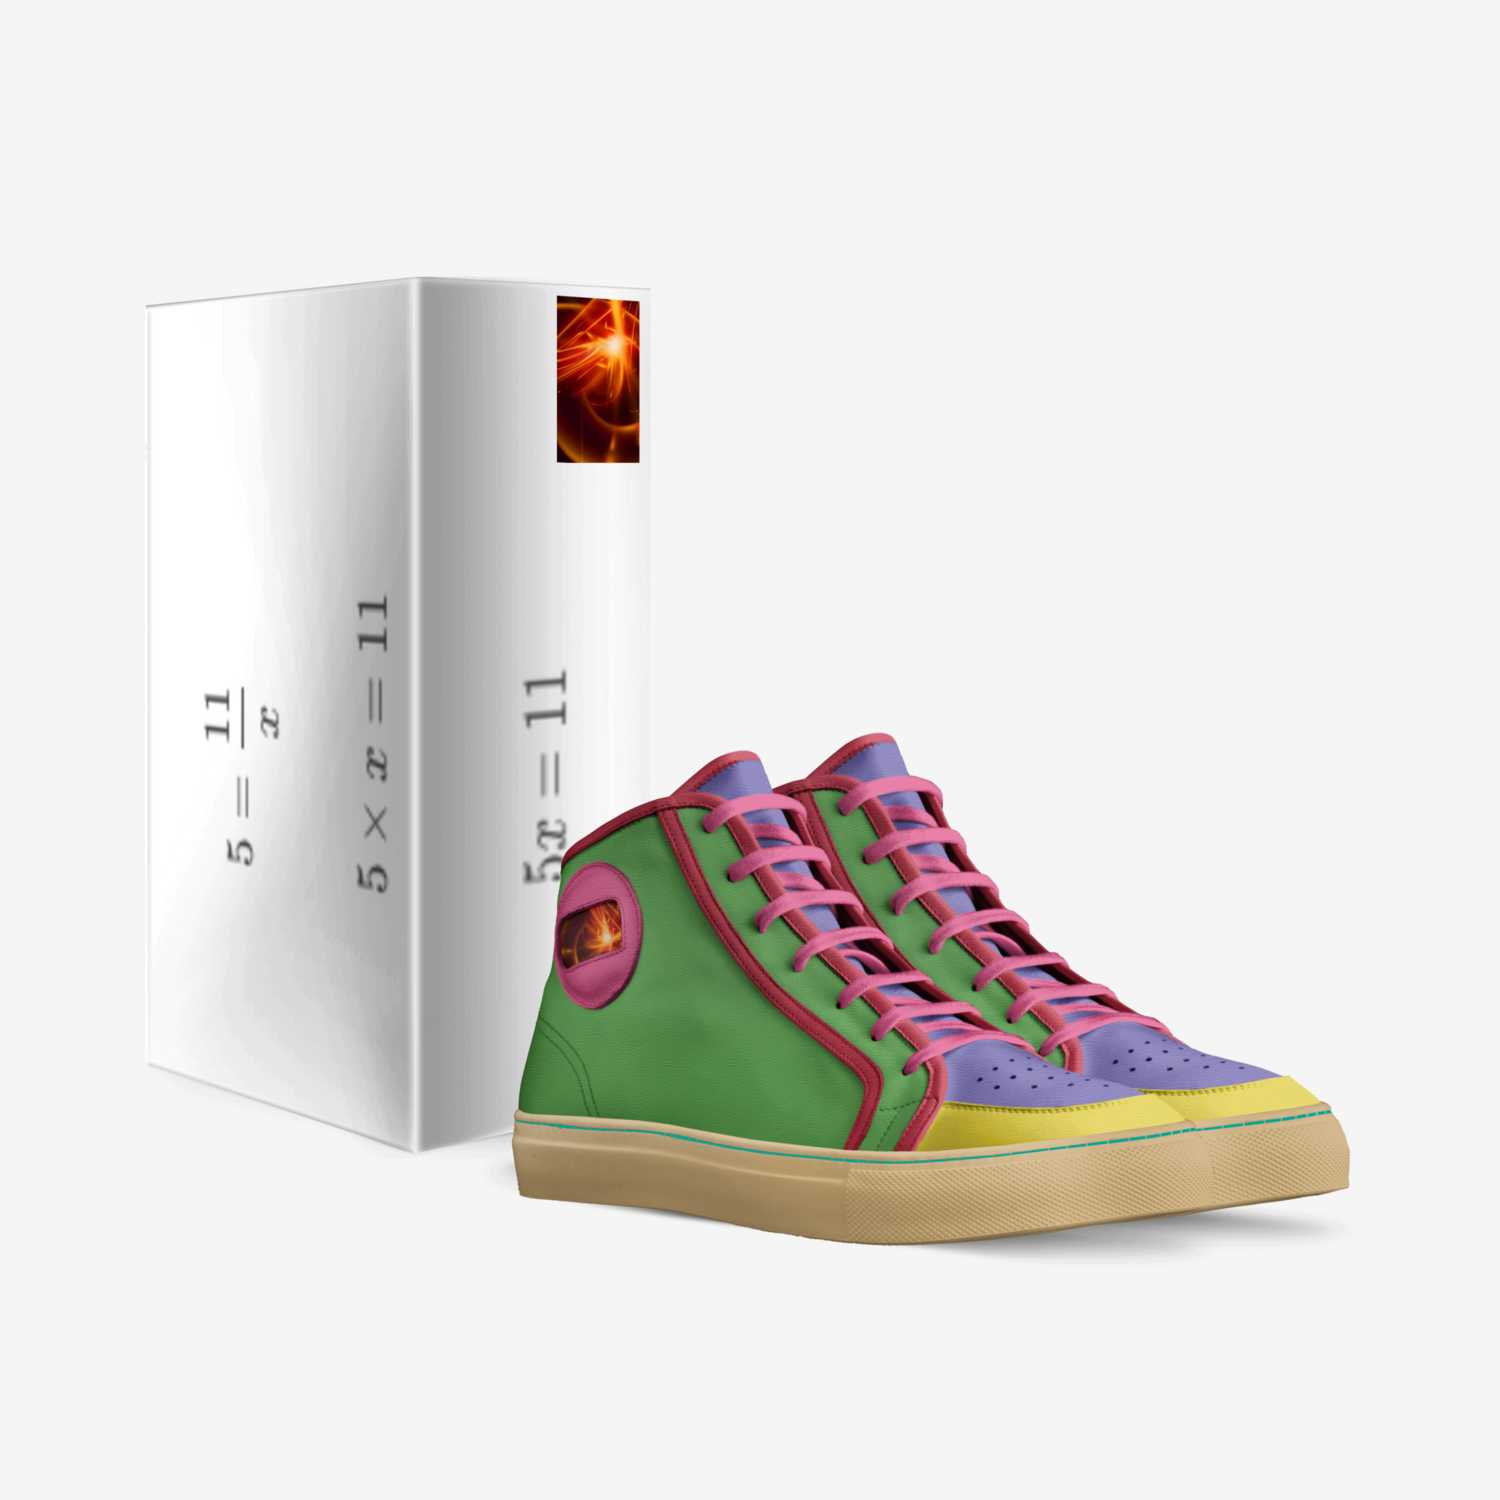 yangiswonderful custom made in Italy shoes by Yangbuzhihaoiswonderful | Box view